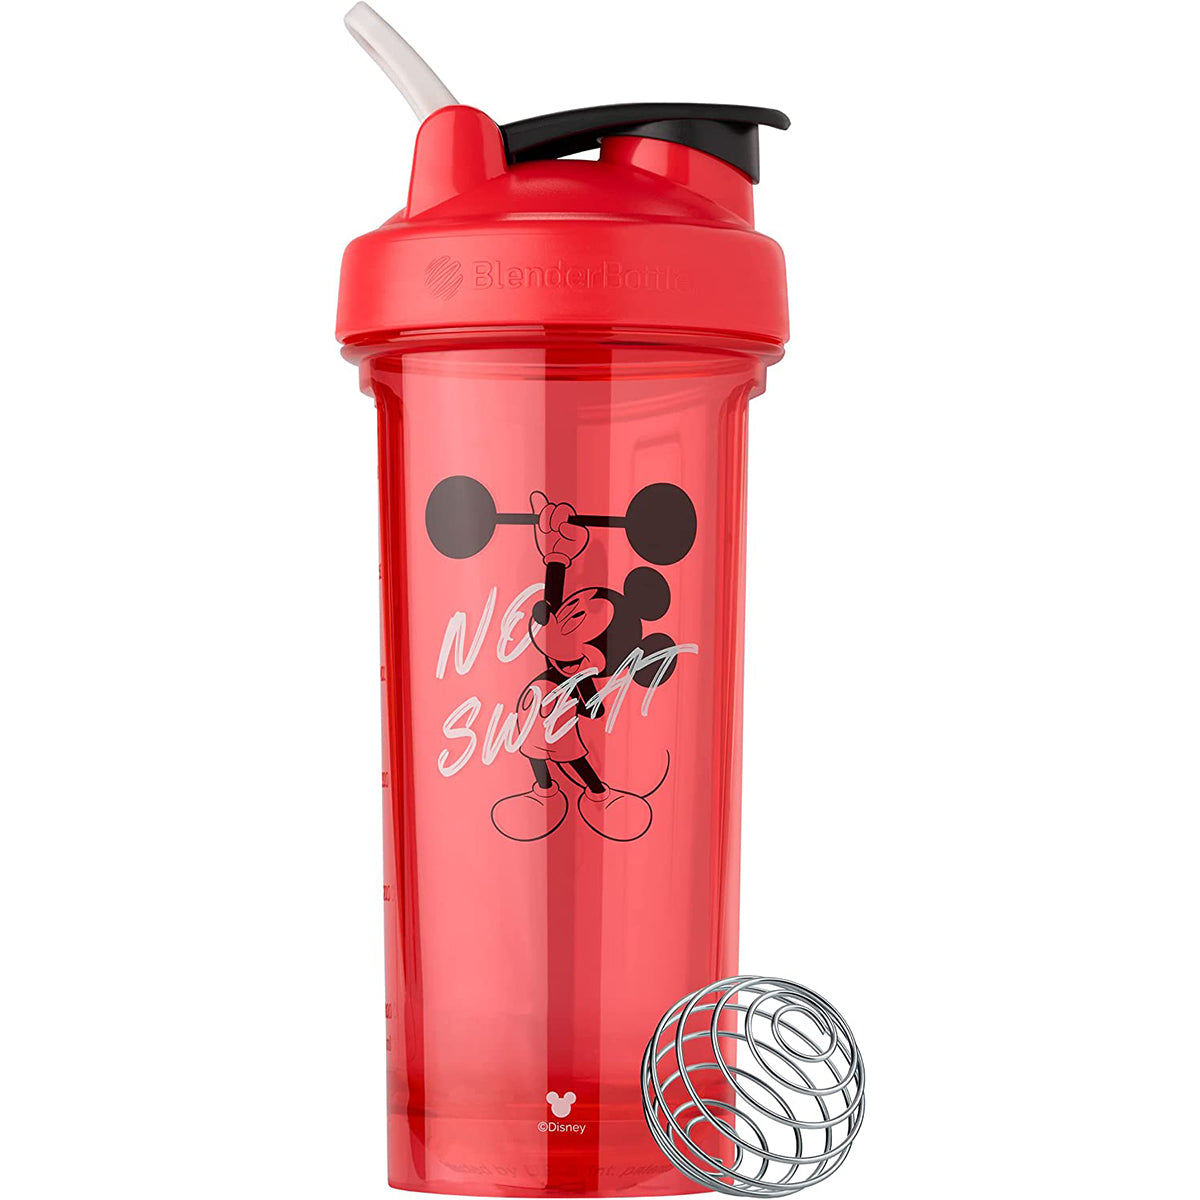 Blender Bottle Classic 28 oz. Disney Pixar Shaker w/ Loop Top - The Incredibles